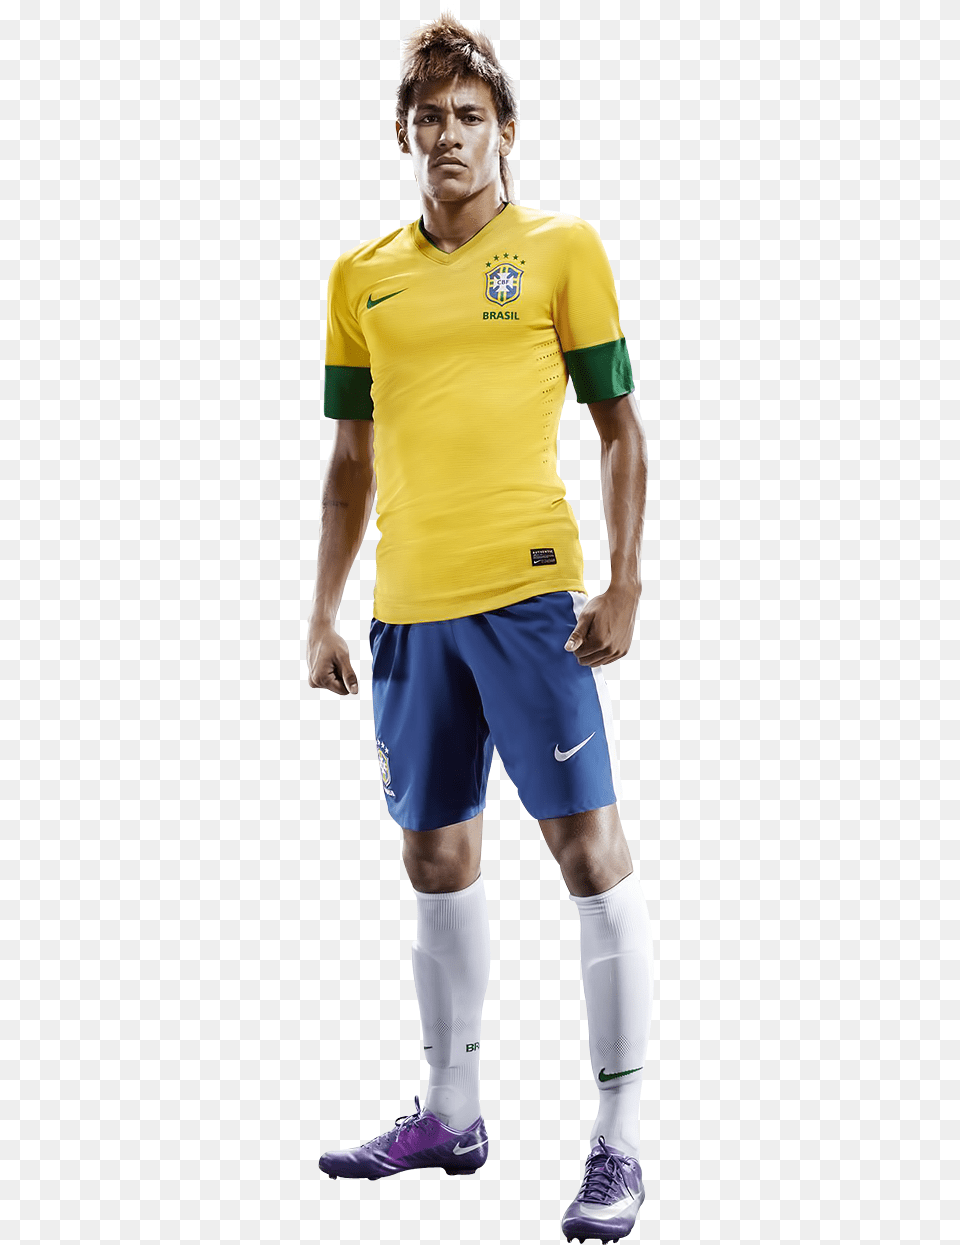 Ronaldinho Gaucho Brazil 12 13 Home Kit, Footwear, Clothing, Shirt, Shorts Png Image